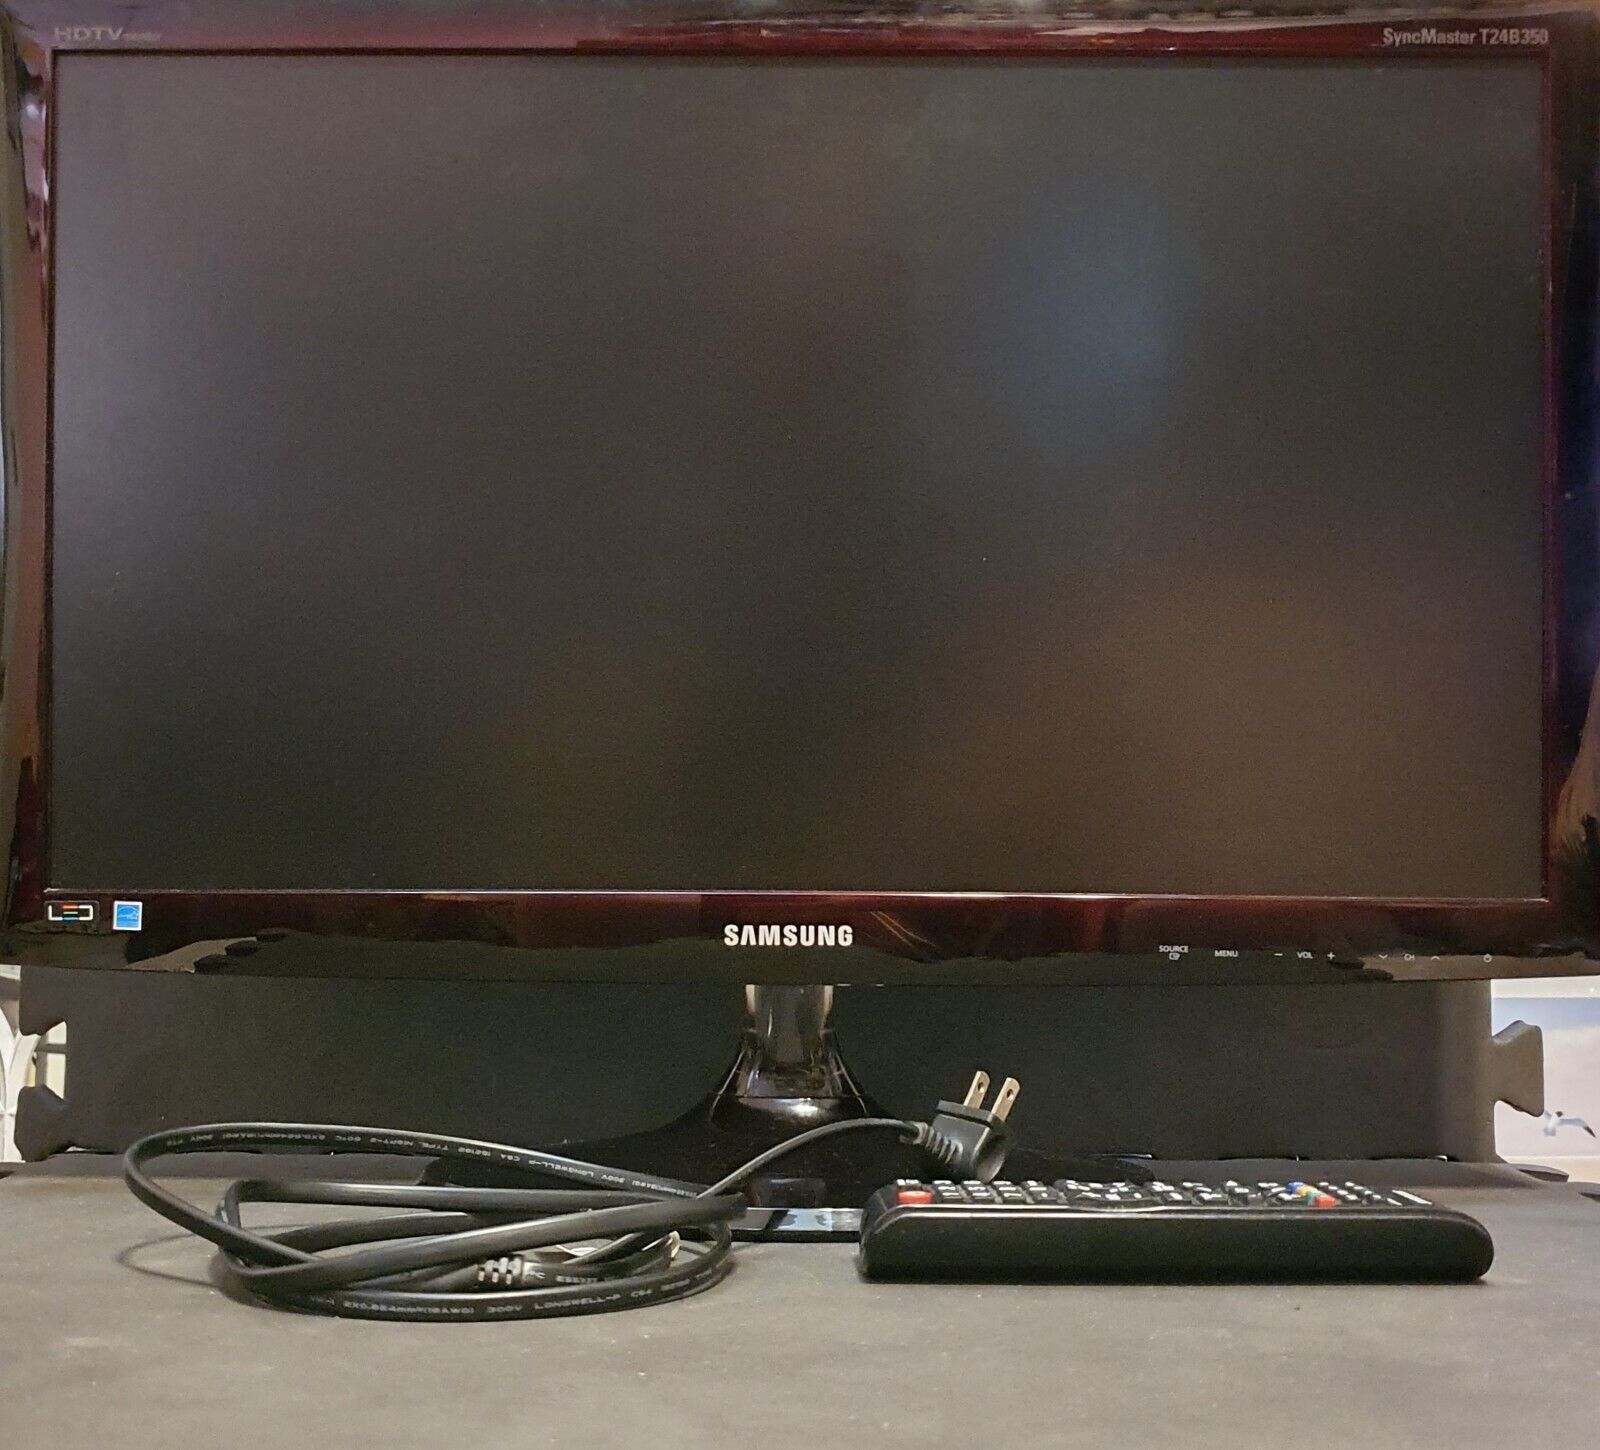 samsung synmaster t24b350 LED TV Television Computet Monitor